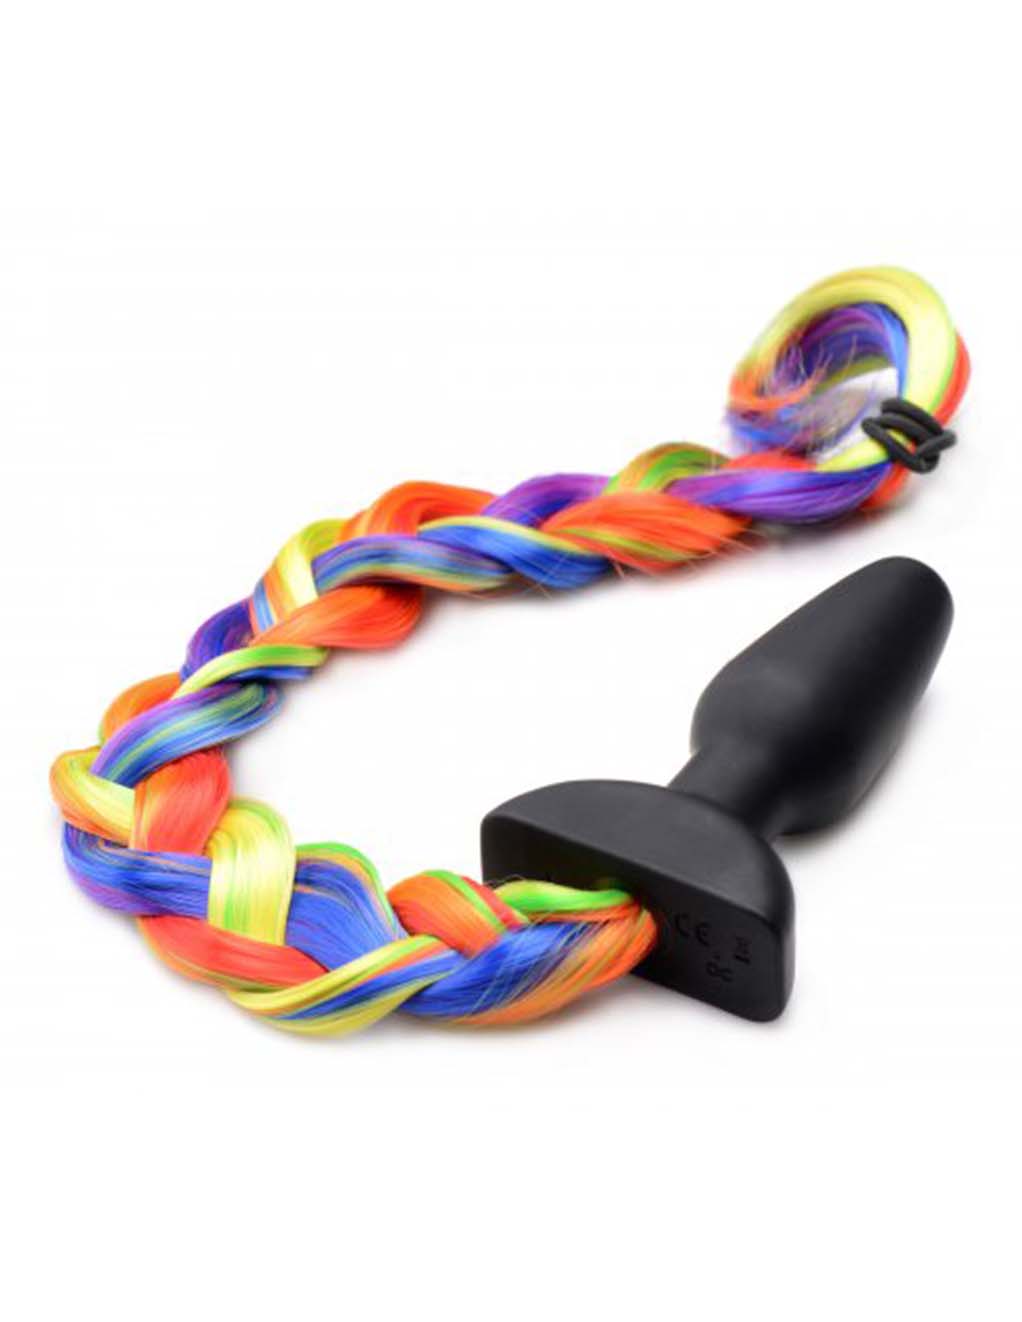 Tailz Vibrating Rainbow Tail Plug- Braided